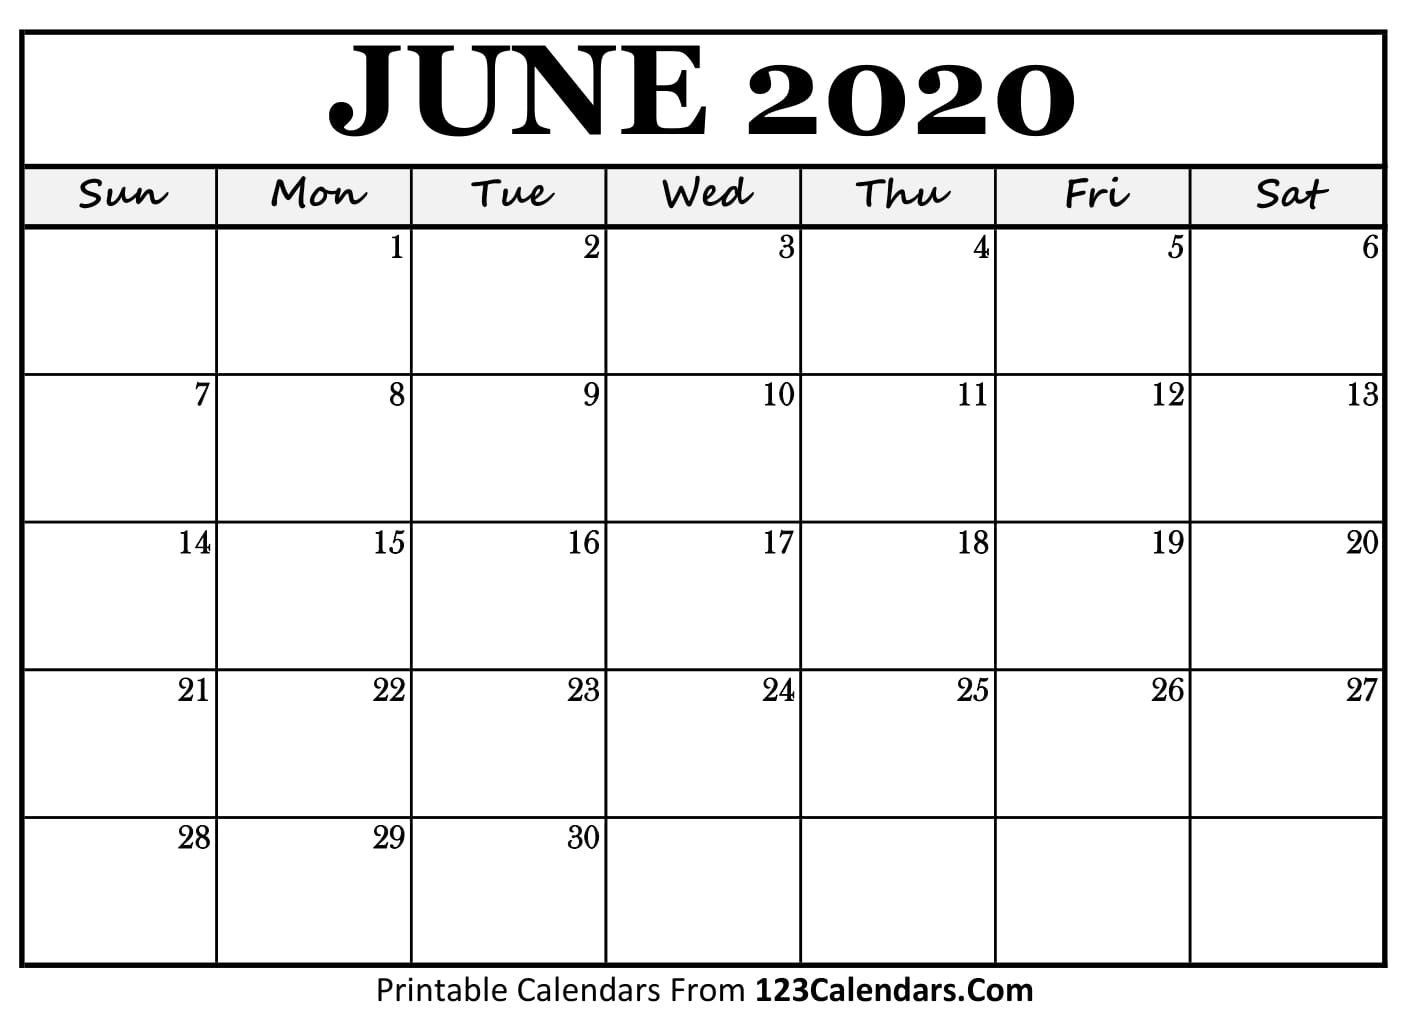 June 2020 Printable Calendar | 123Calendars